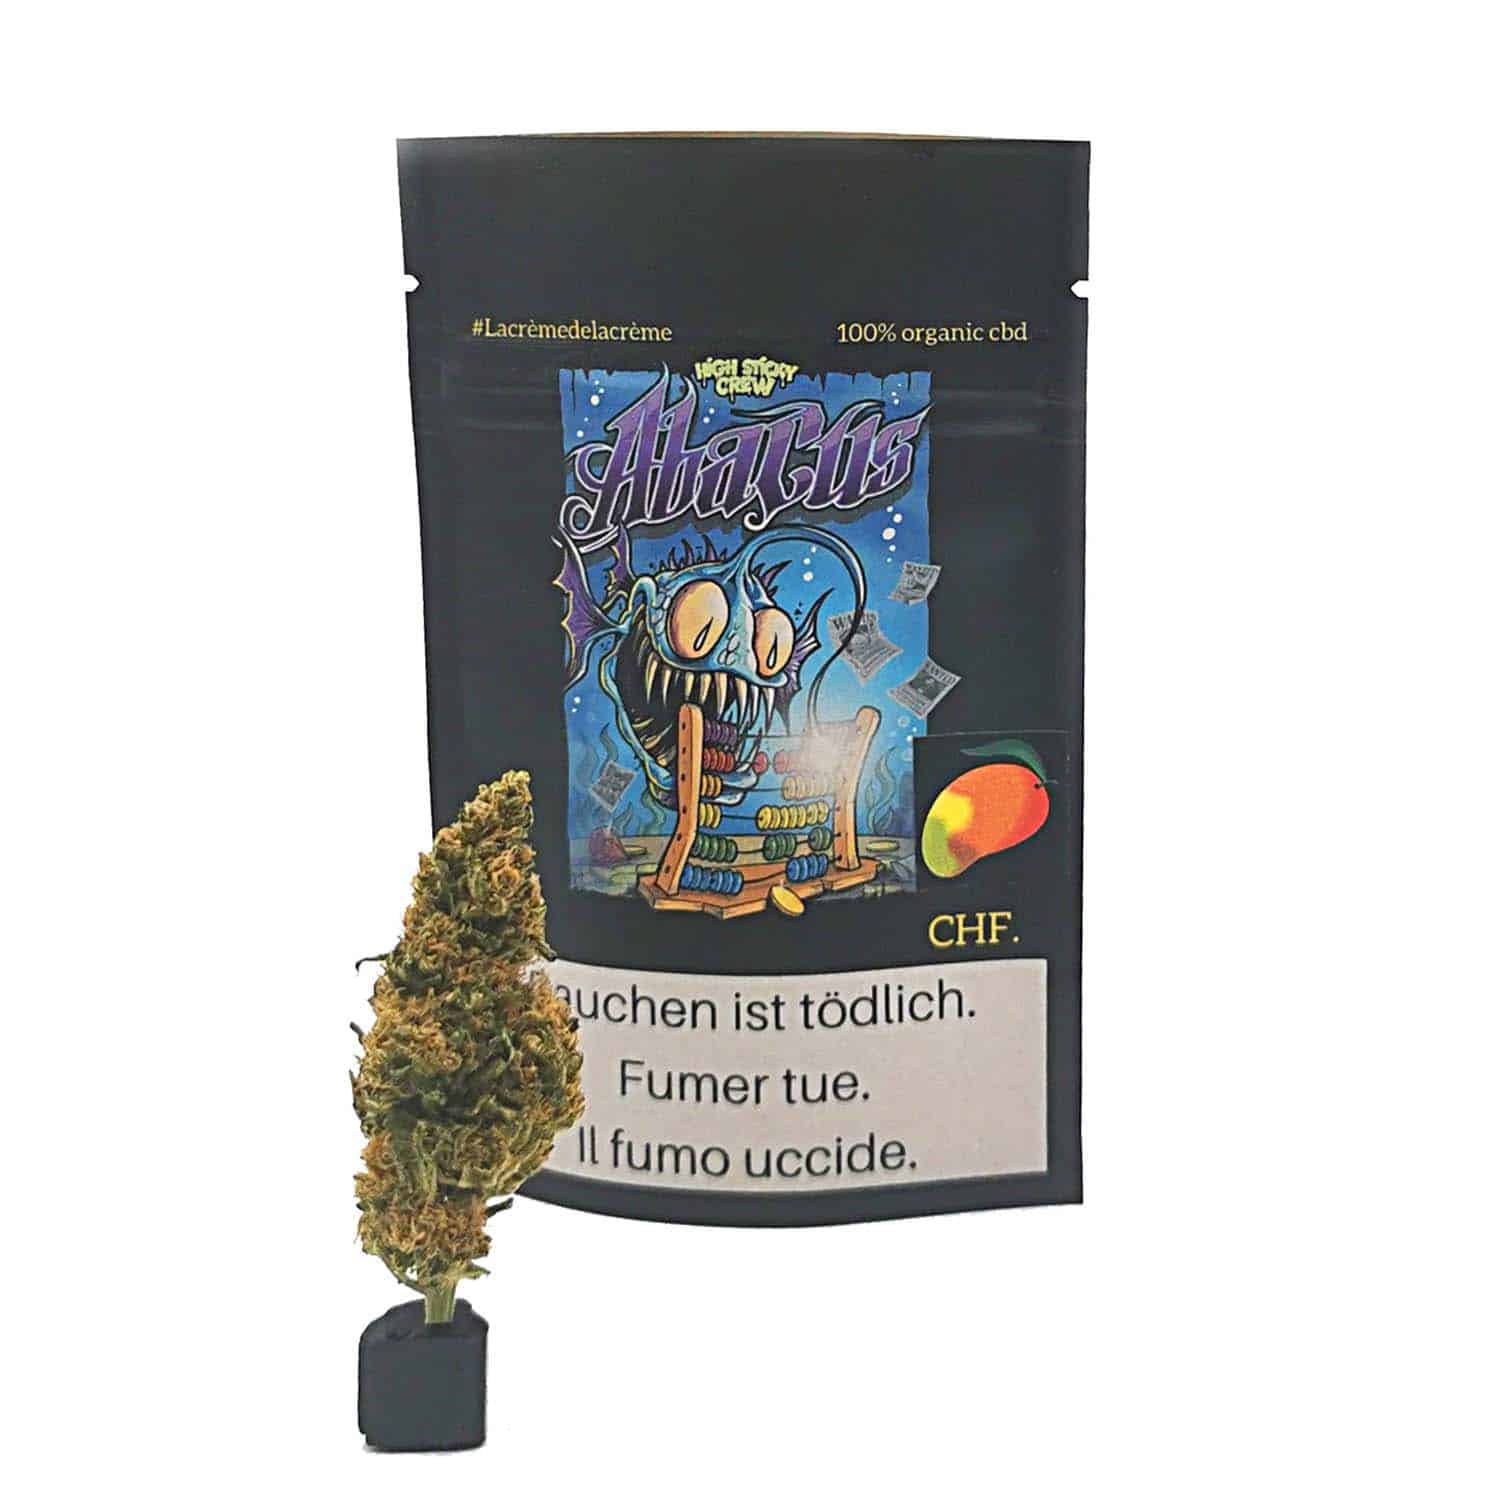 High Sticky Crew Abacus Mango, Legal Cannabis